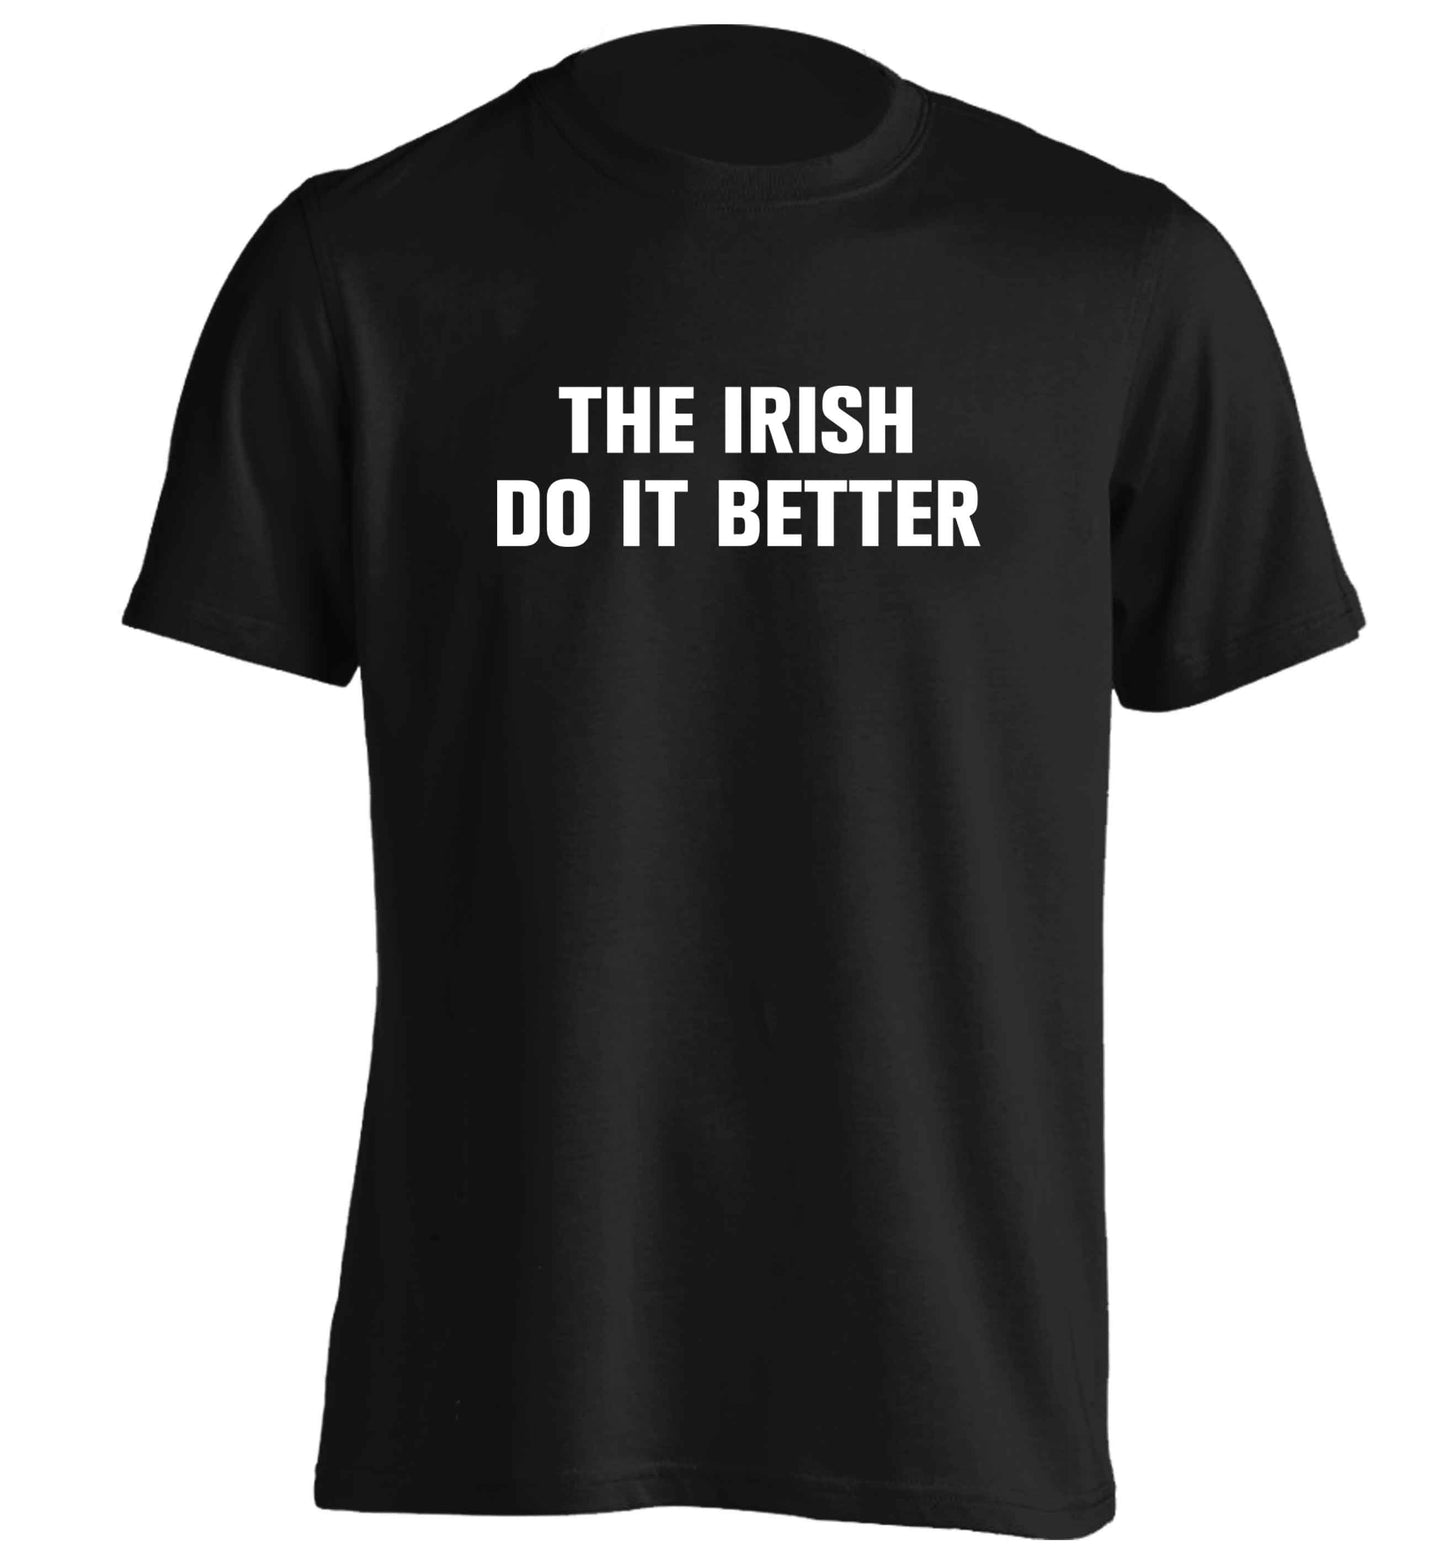 The Irish do it better adults unisex black Tshirt 2XL